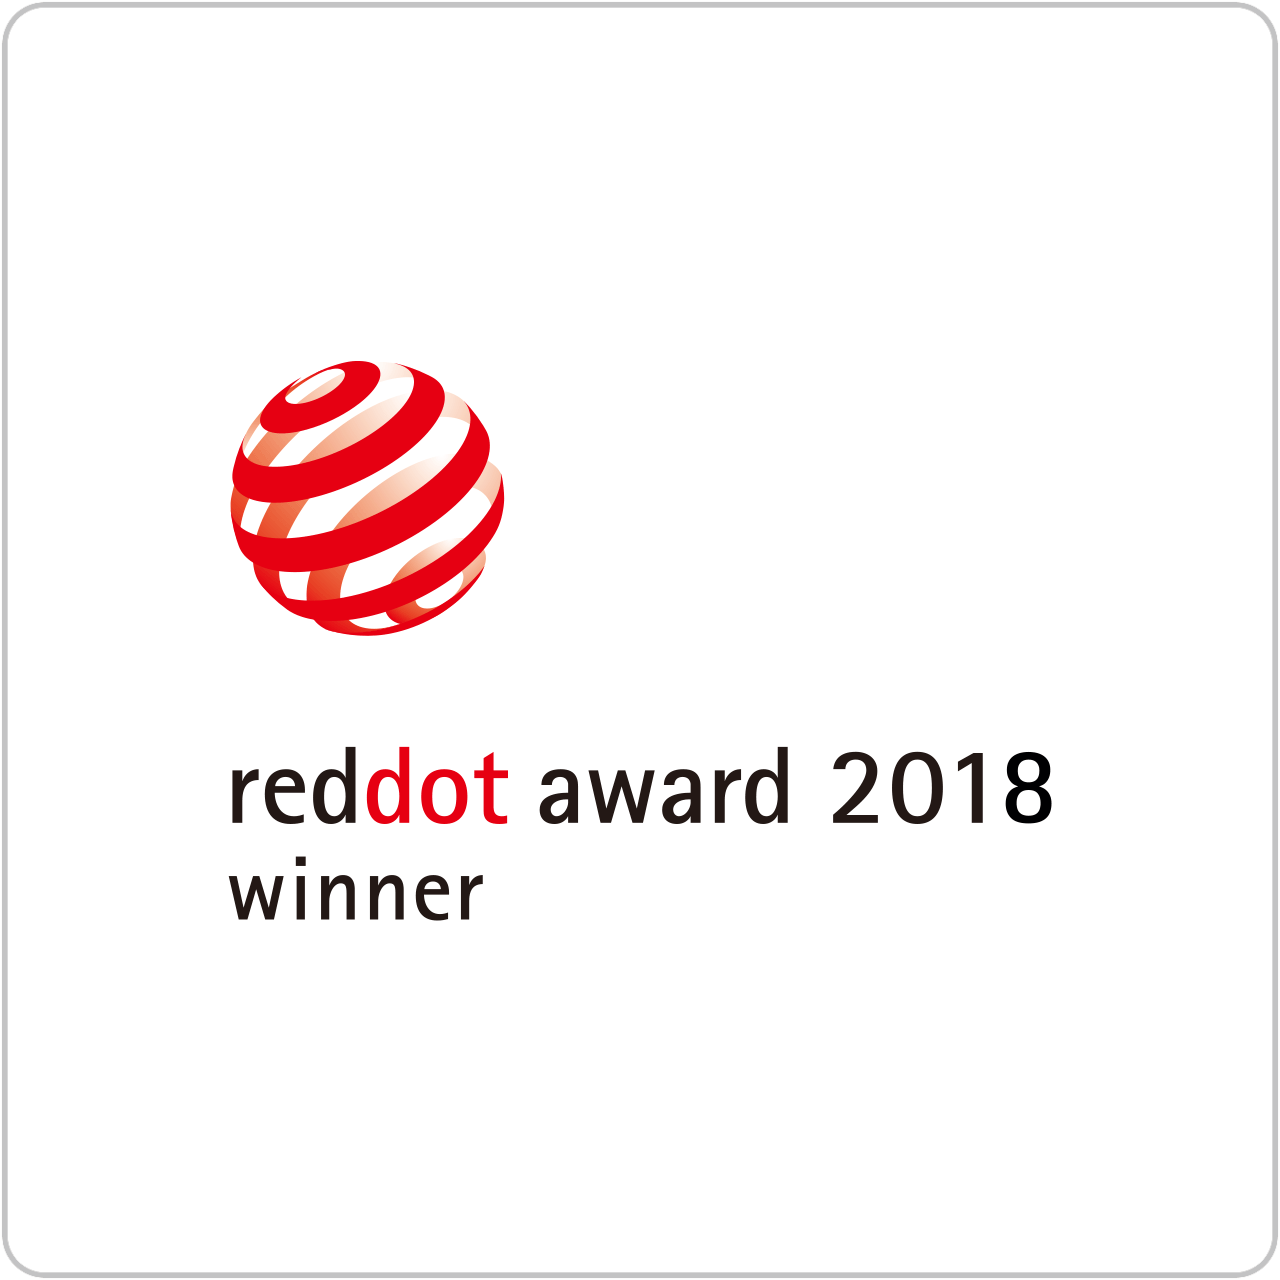 reddot award 2018